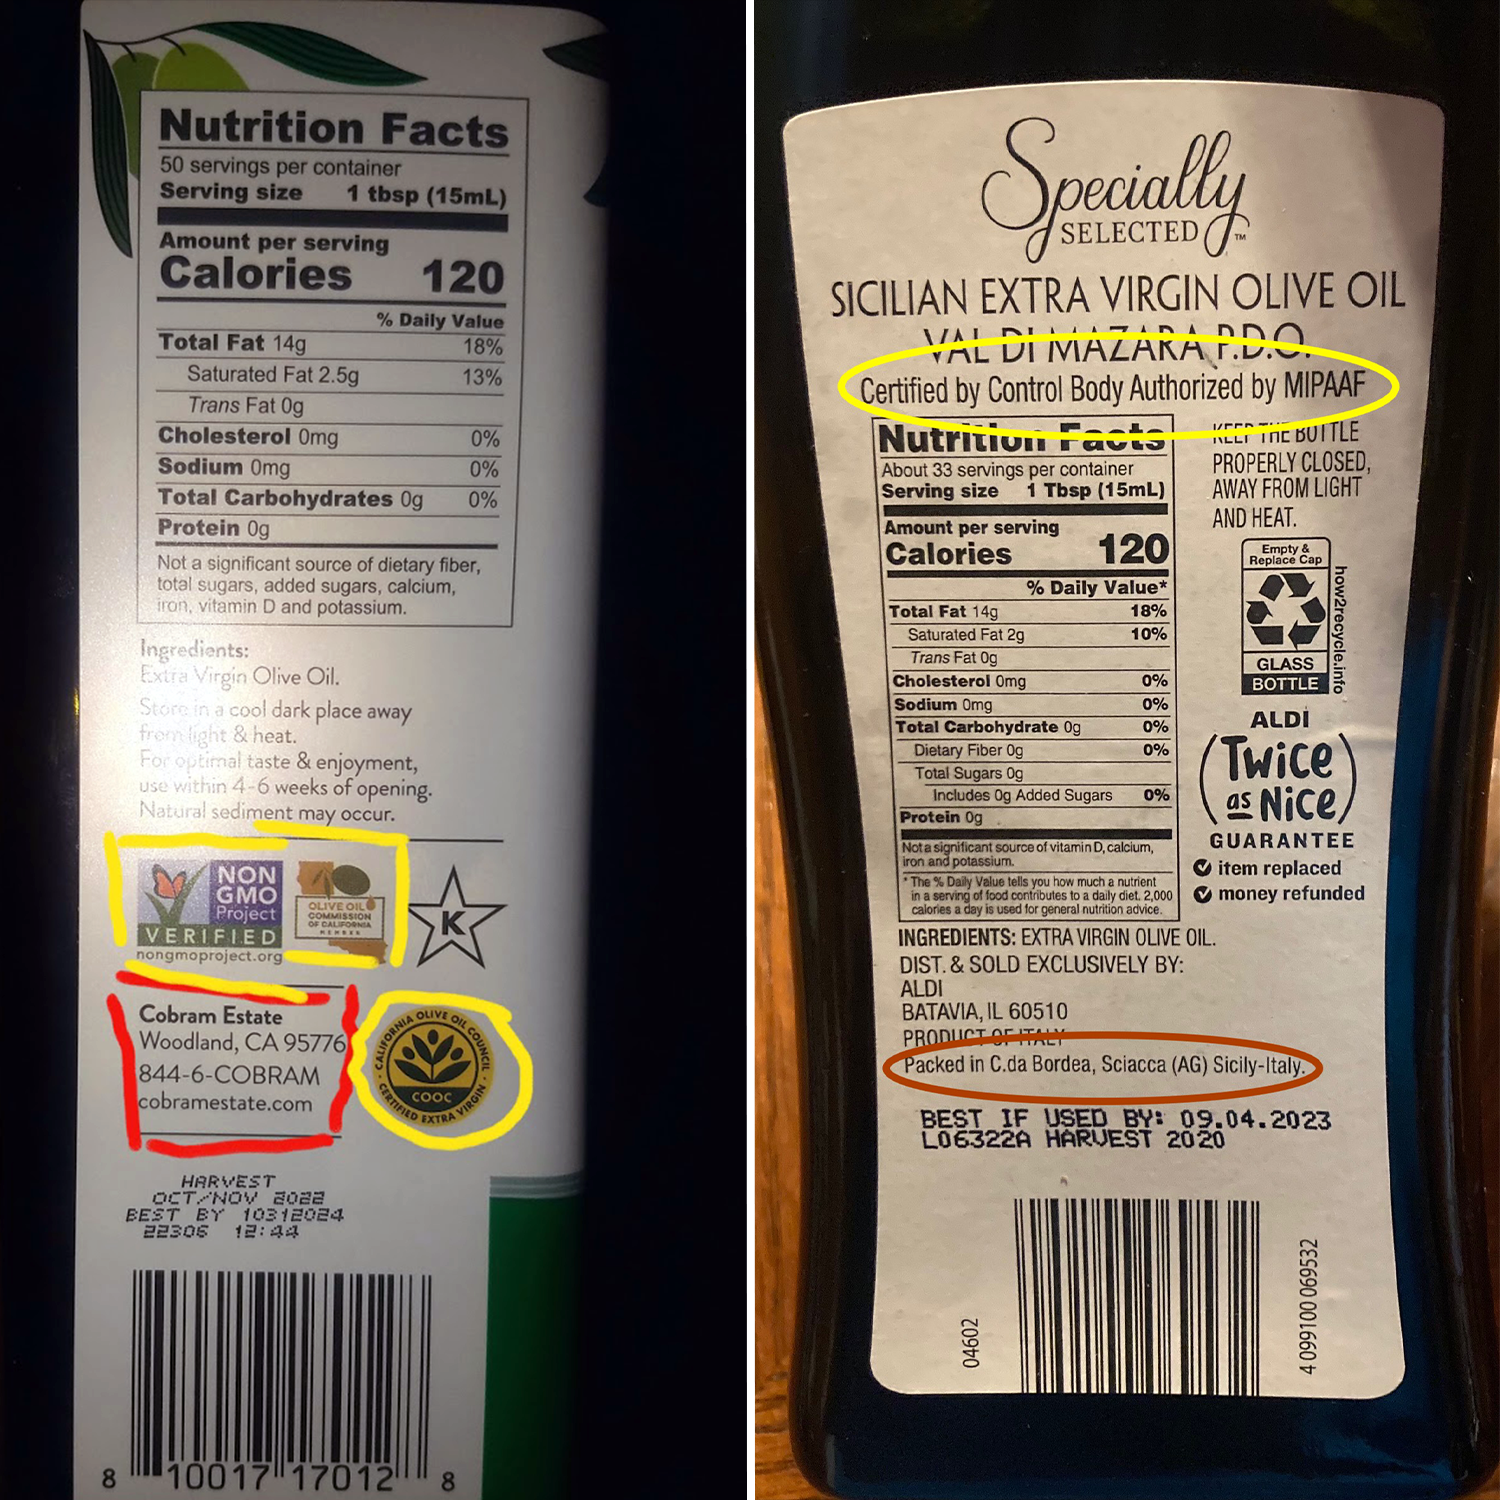 comparing oils' labels